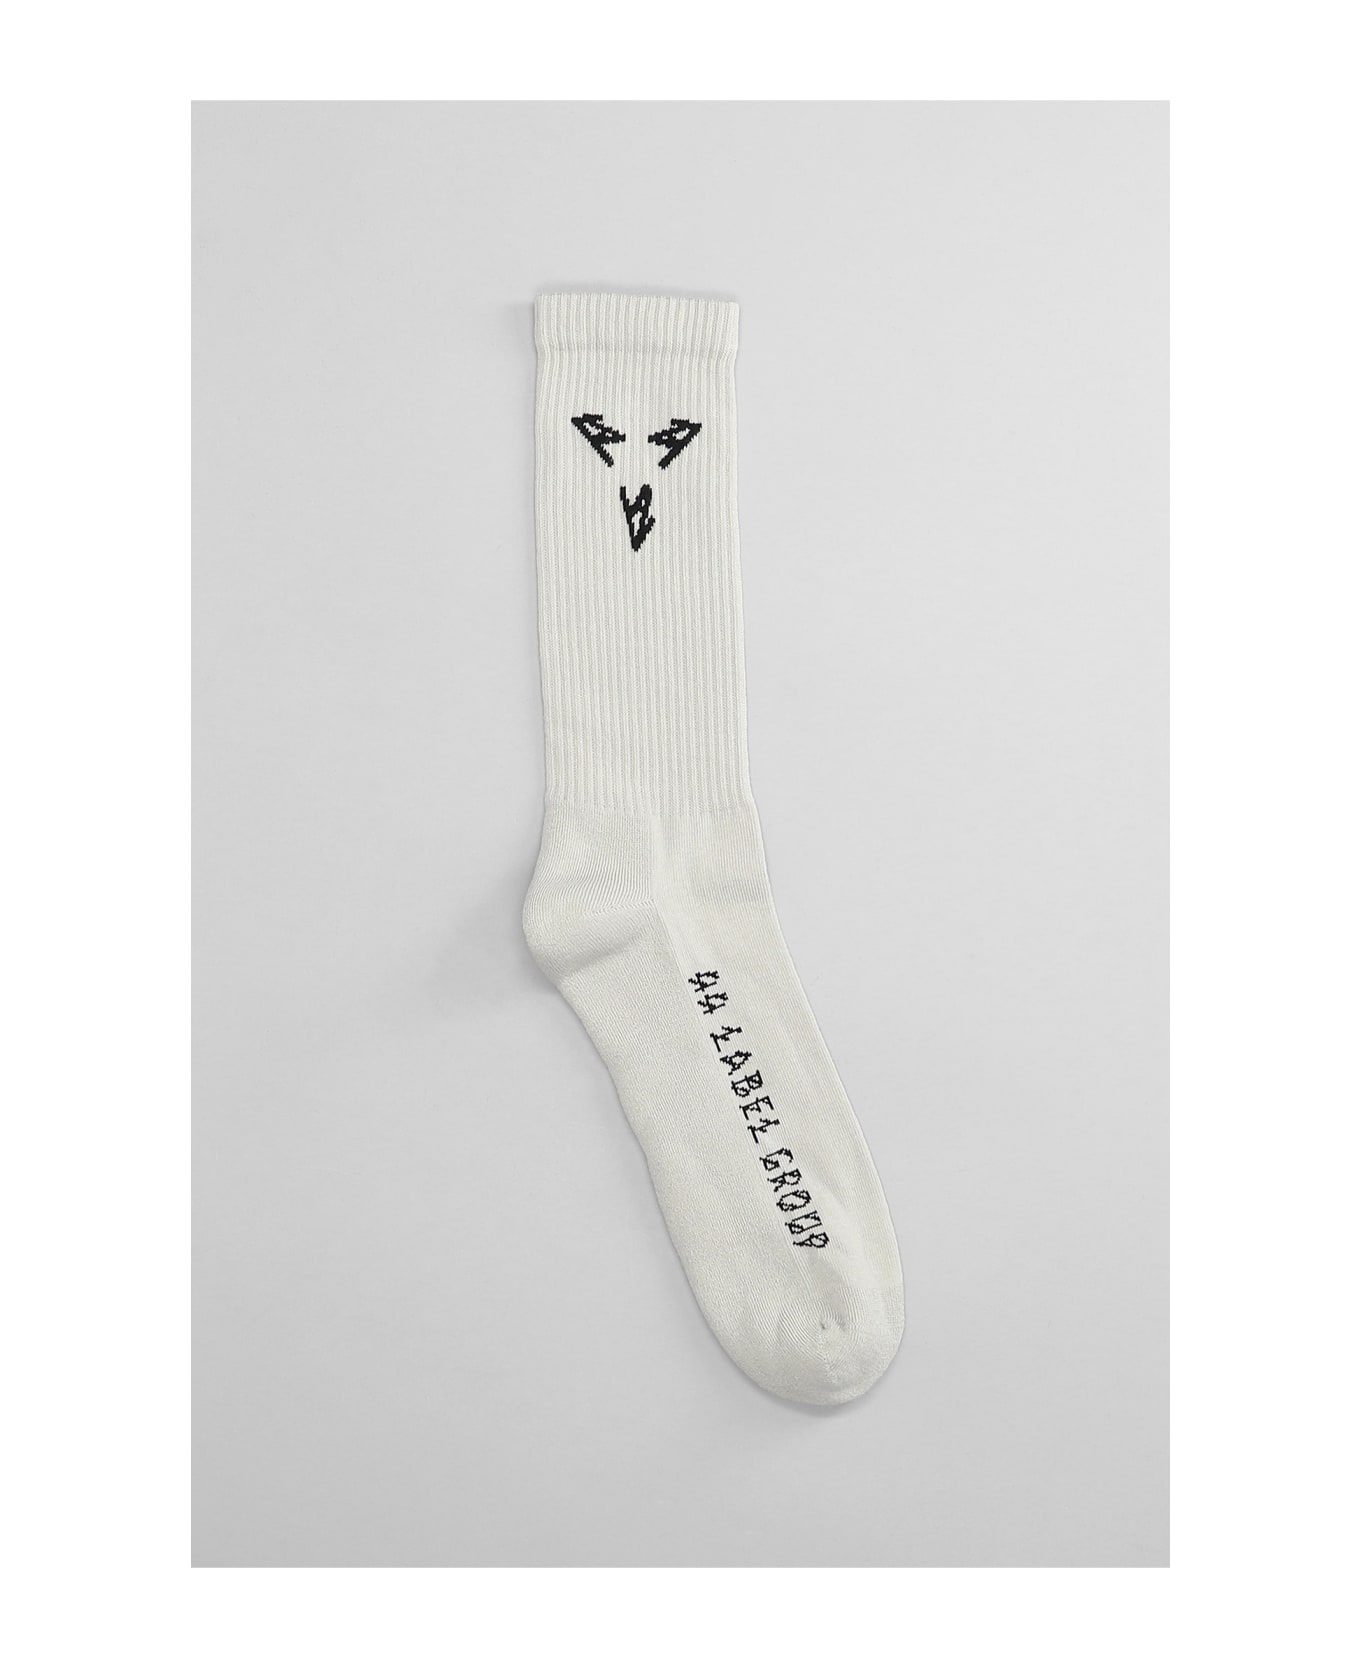 44 Label Group Socks In Grey Cotton - grey 靴下